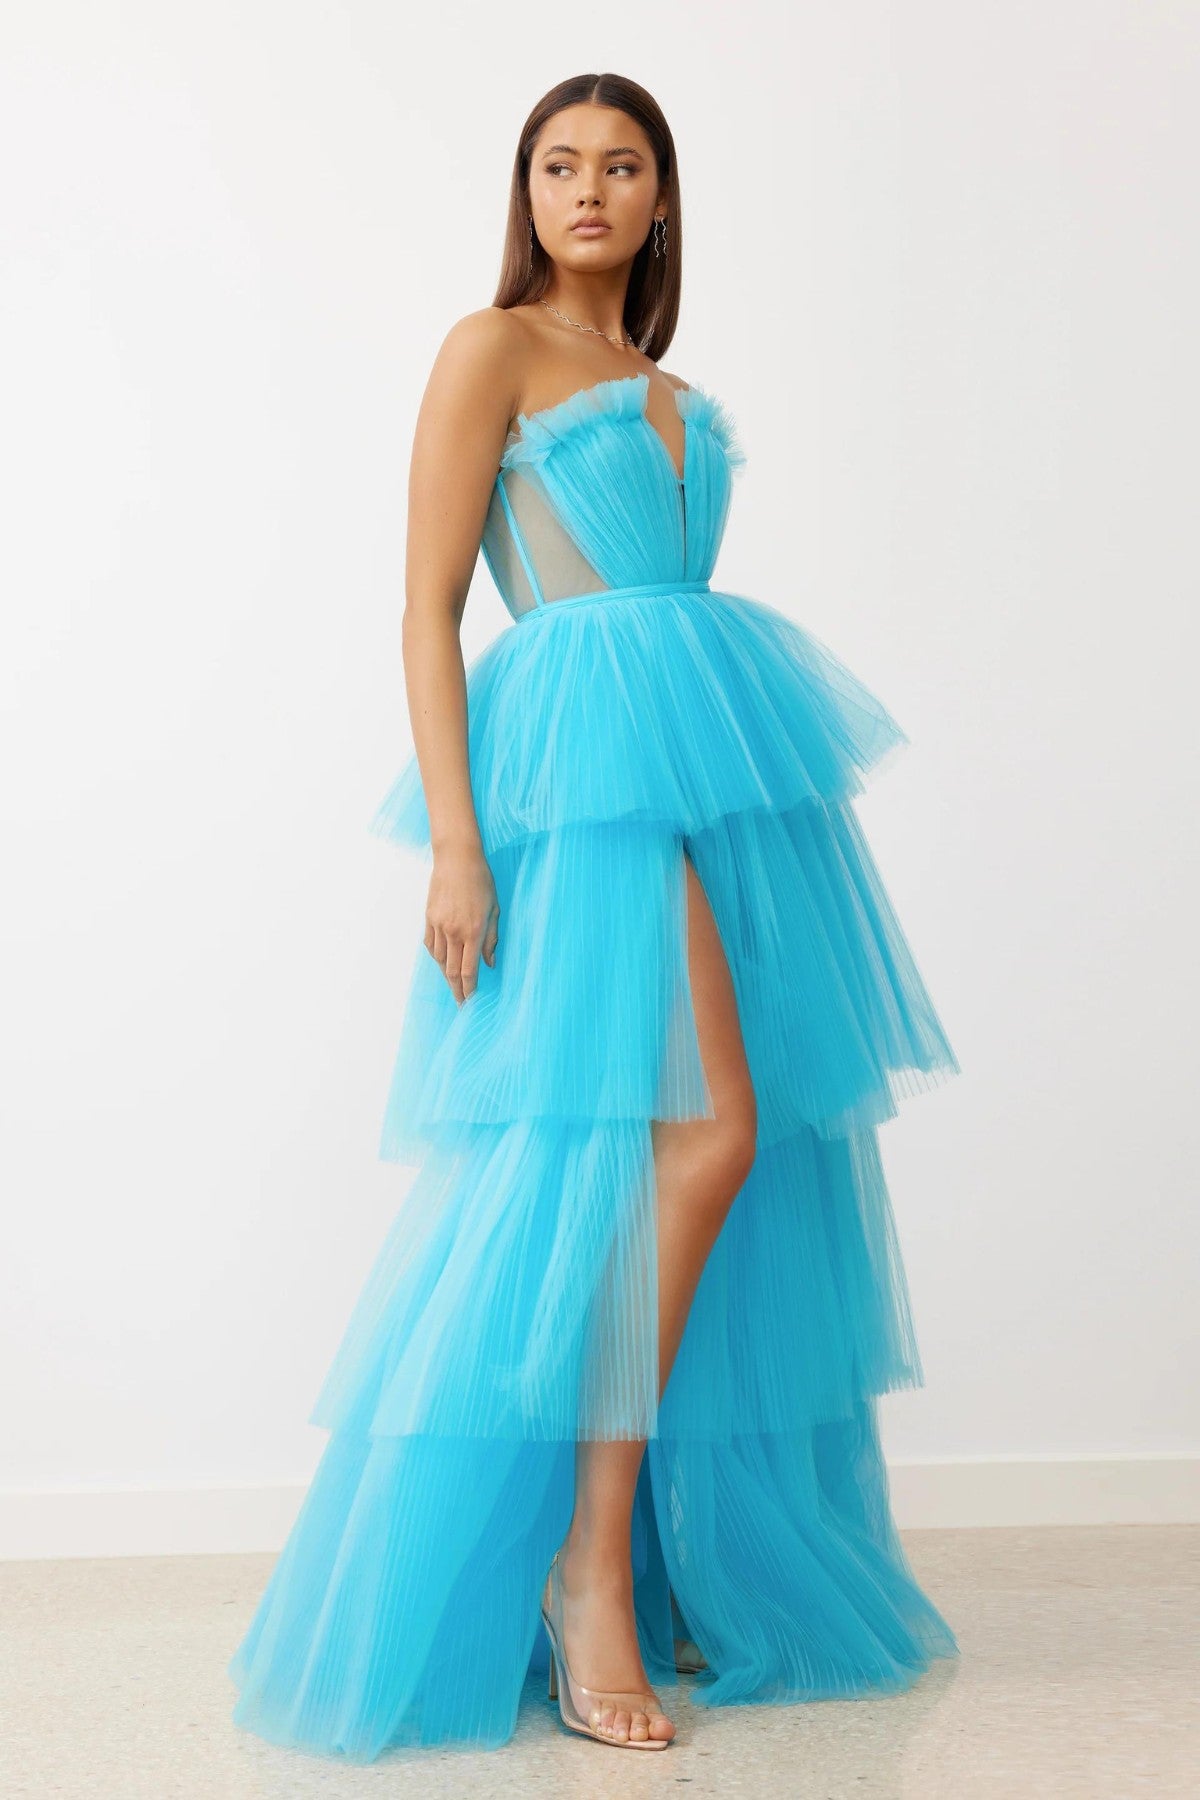 Tinaholy LEXI Cruz Dress (Turquoise Blue) - RRP $499 - 10_c4b6a7c6-ec49-484d-9cff-86fa5d85ef16.jpg